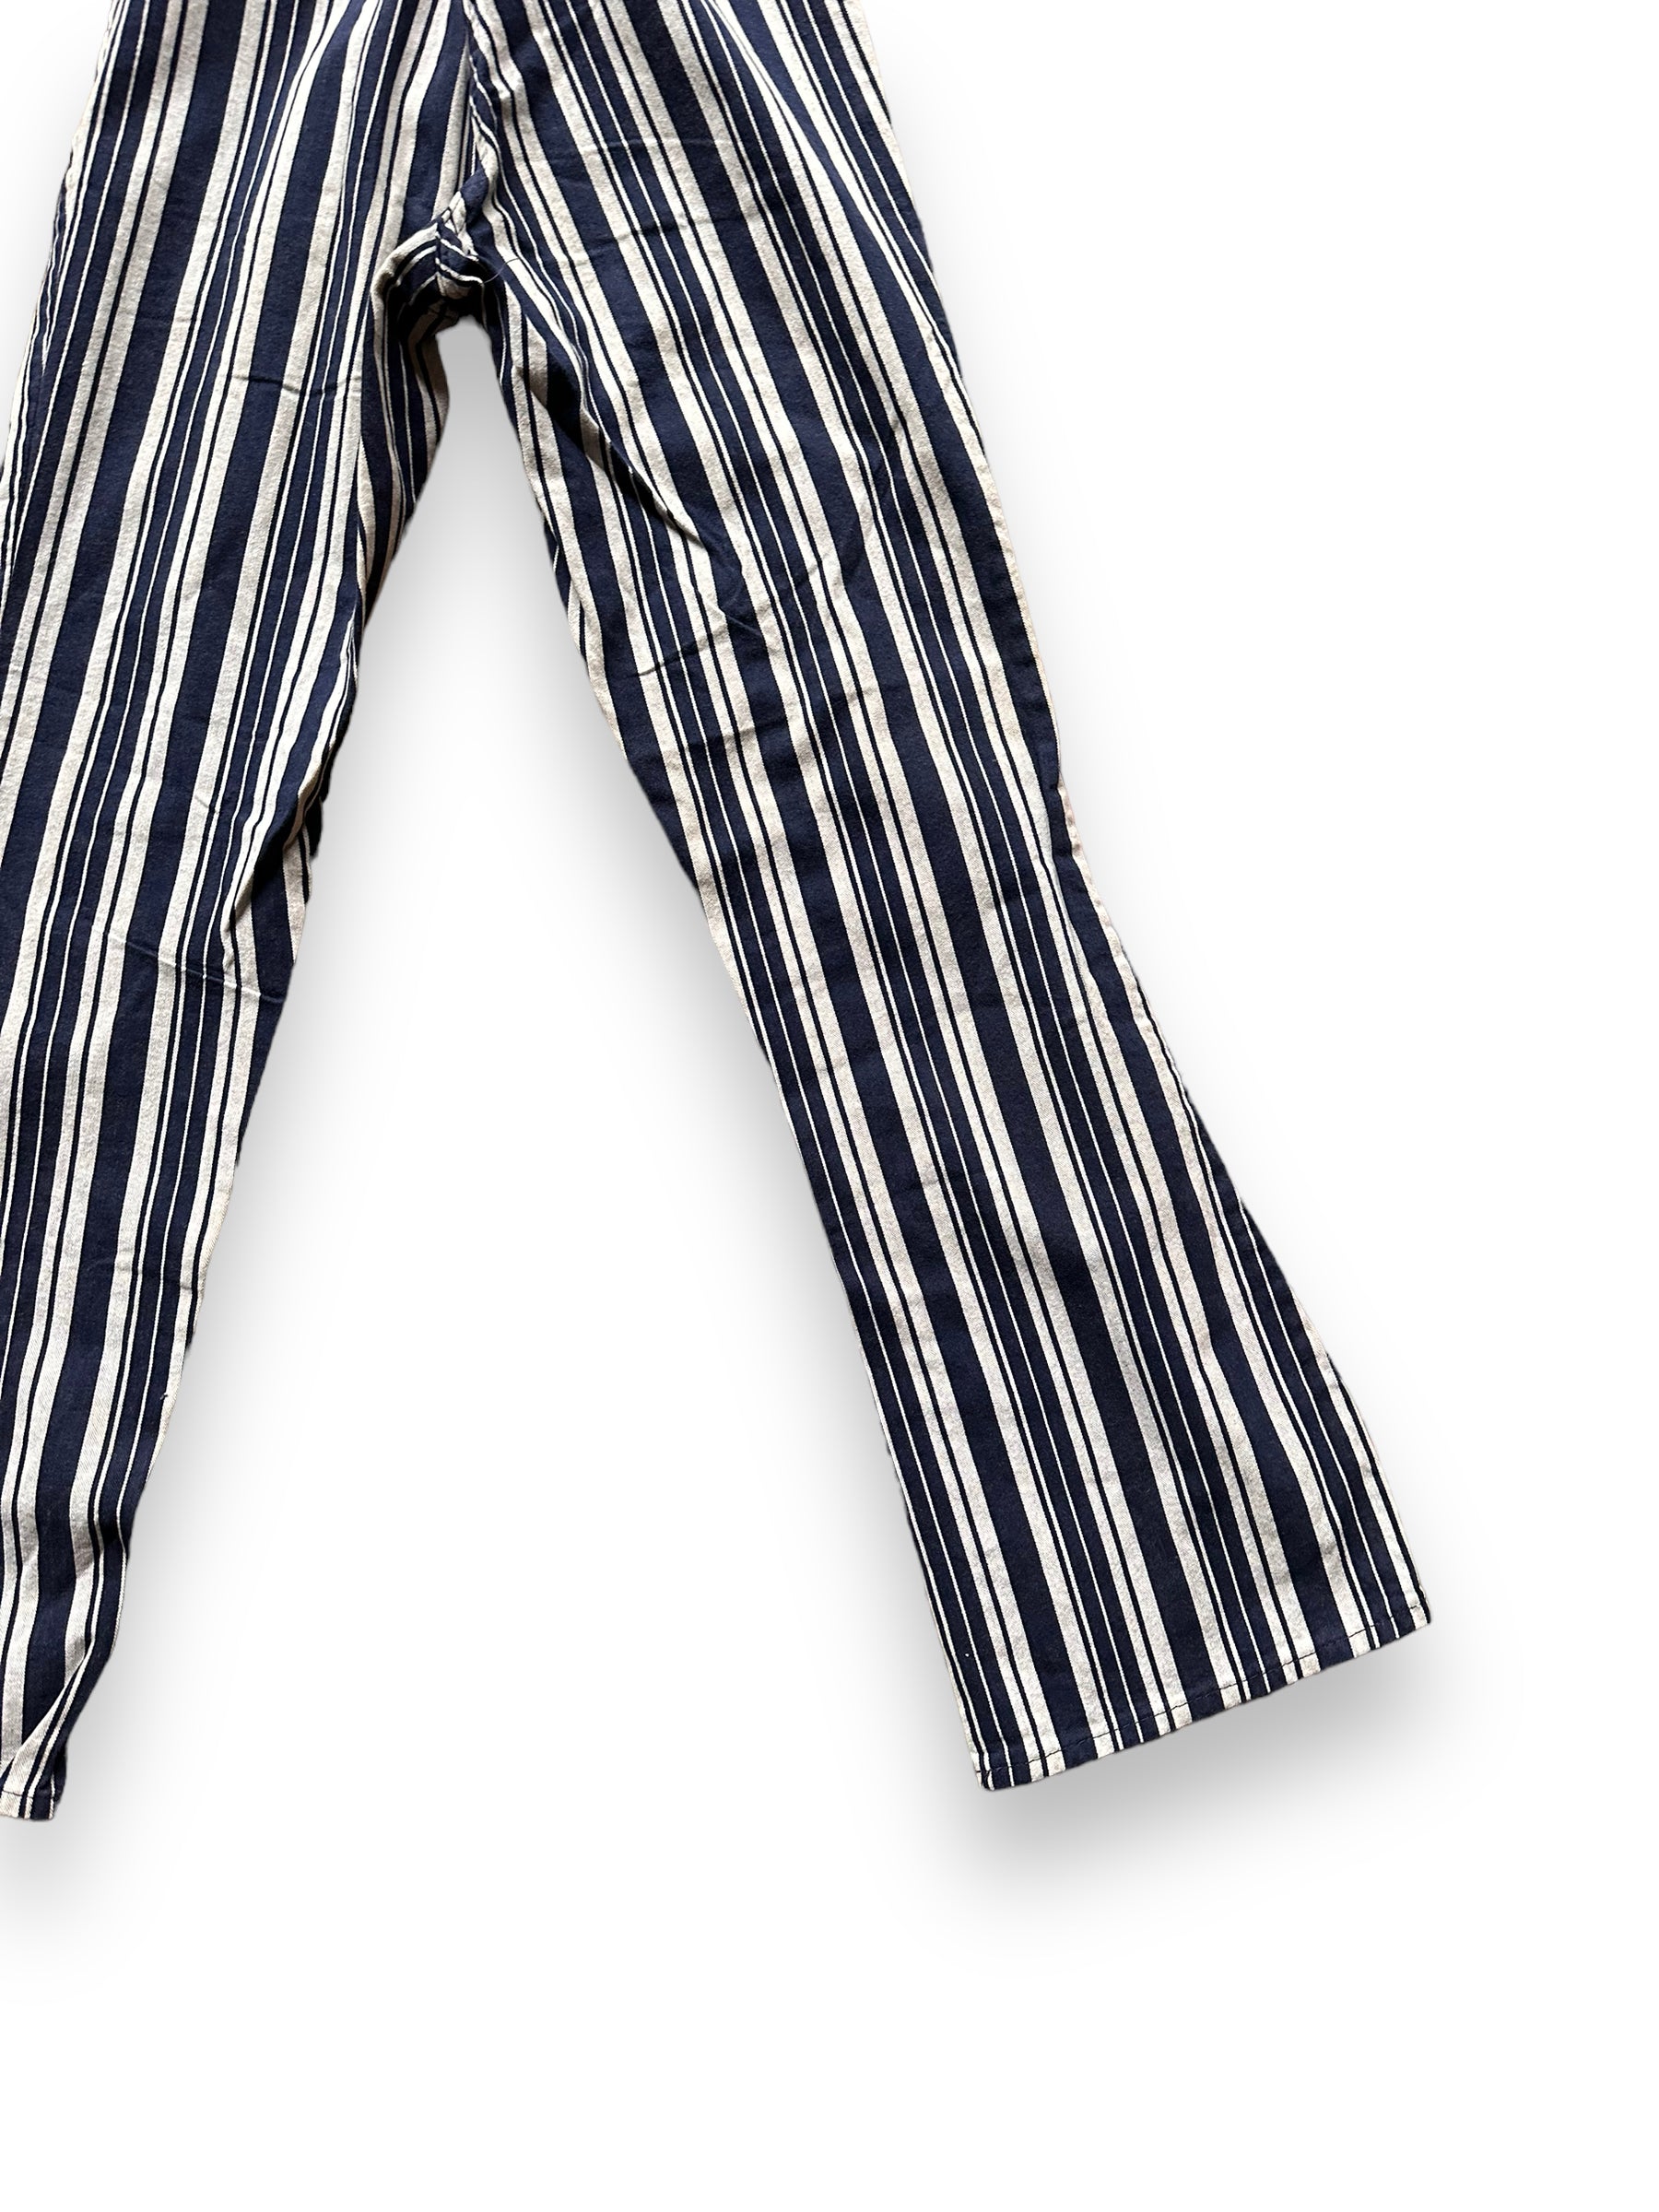 Right Rear Pant Leg on Vintage Jaggeresque Striped Flares W29 | Vintage Bellbottoms Seattle | Barn Owl Vintage Clothing